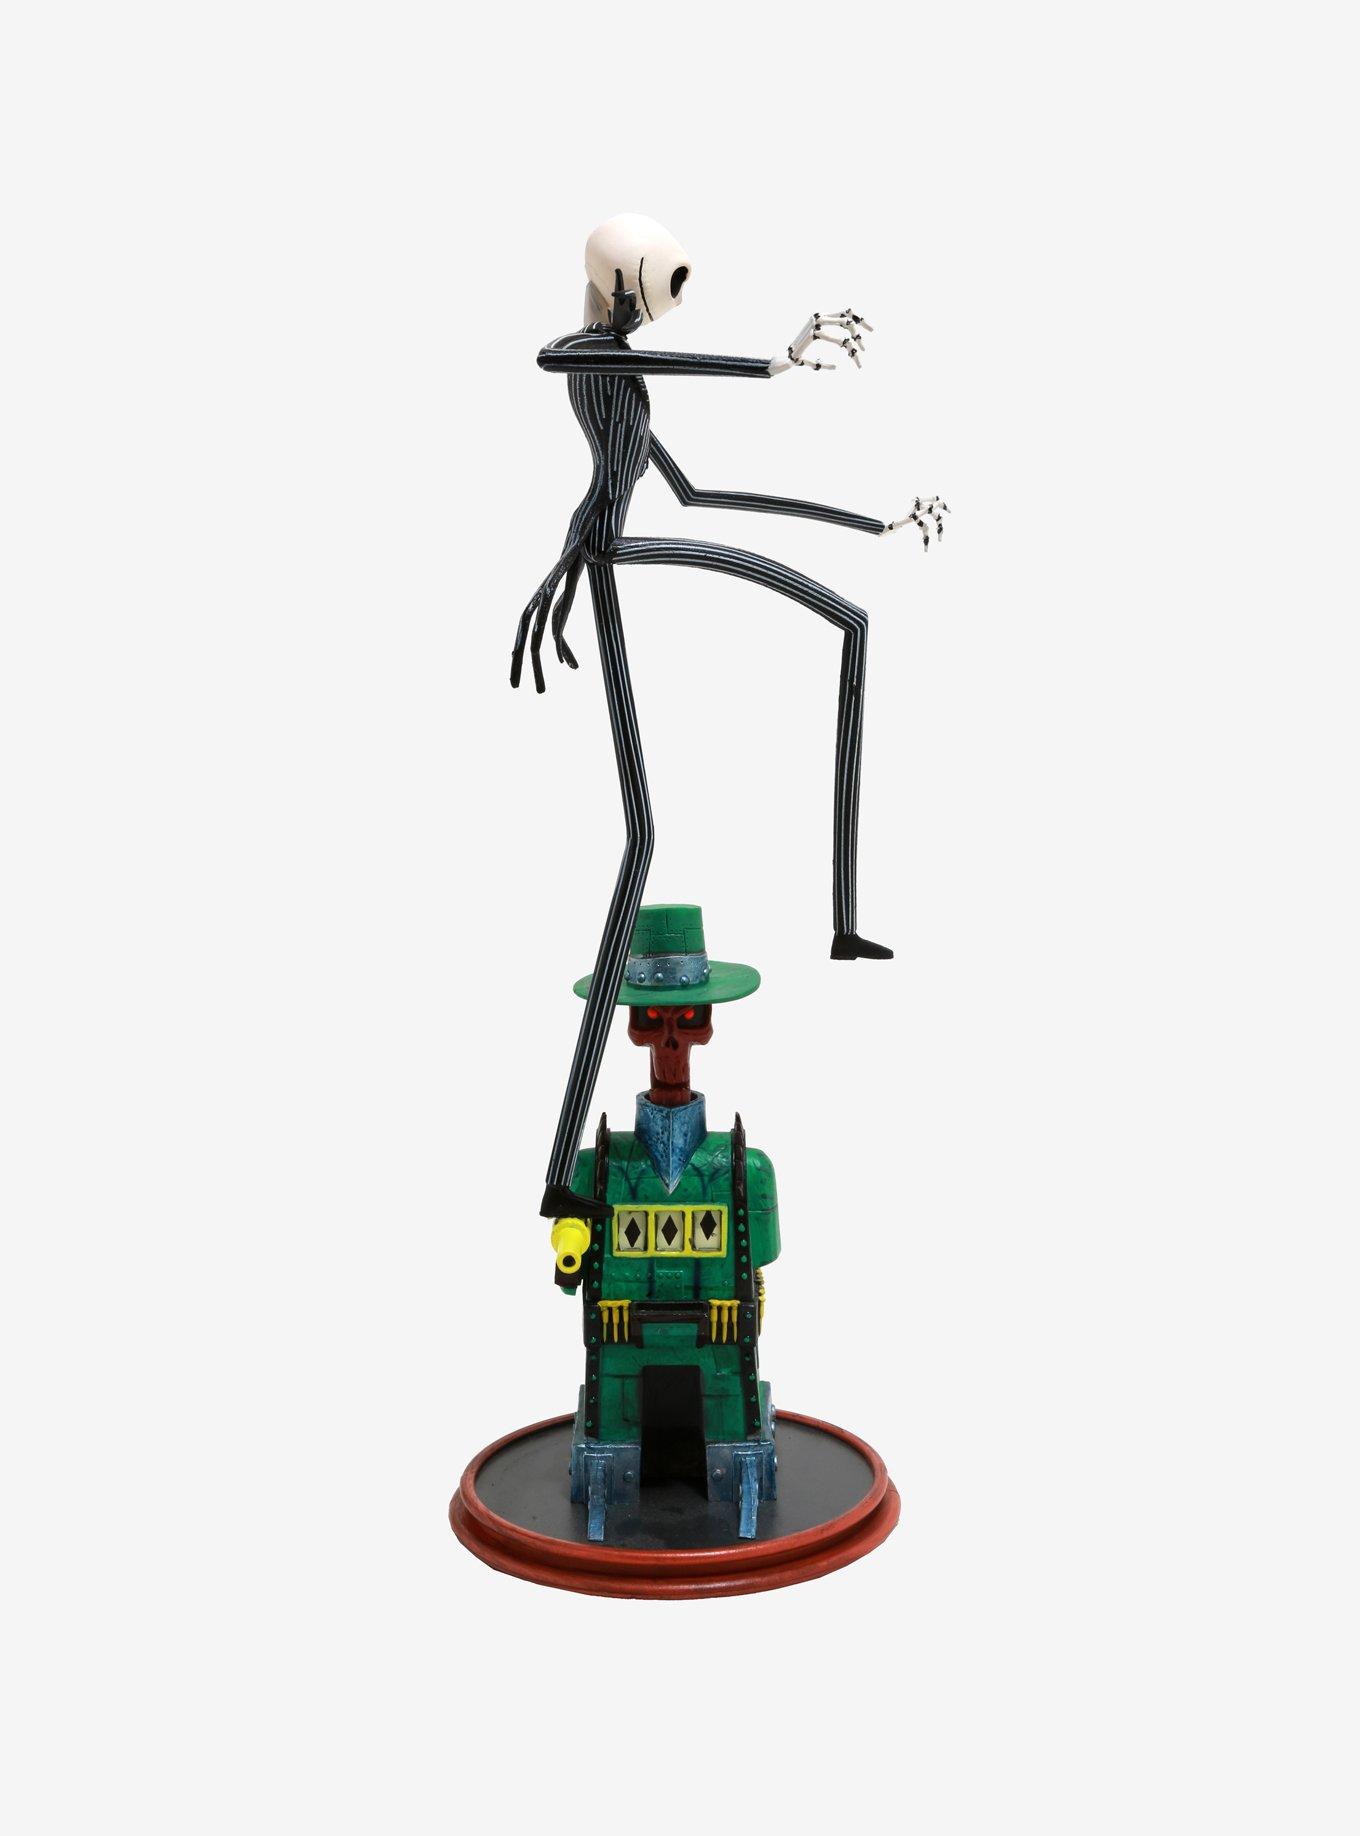 The Nightmare Before Christmas Gallery Jack Skellington In Oogie's Lair PVC Diorama Collectible Figure, , alternate